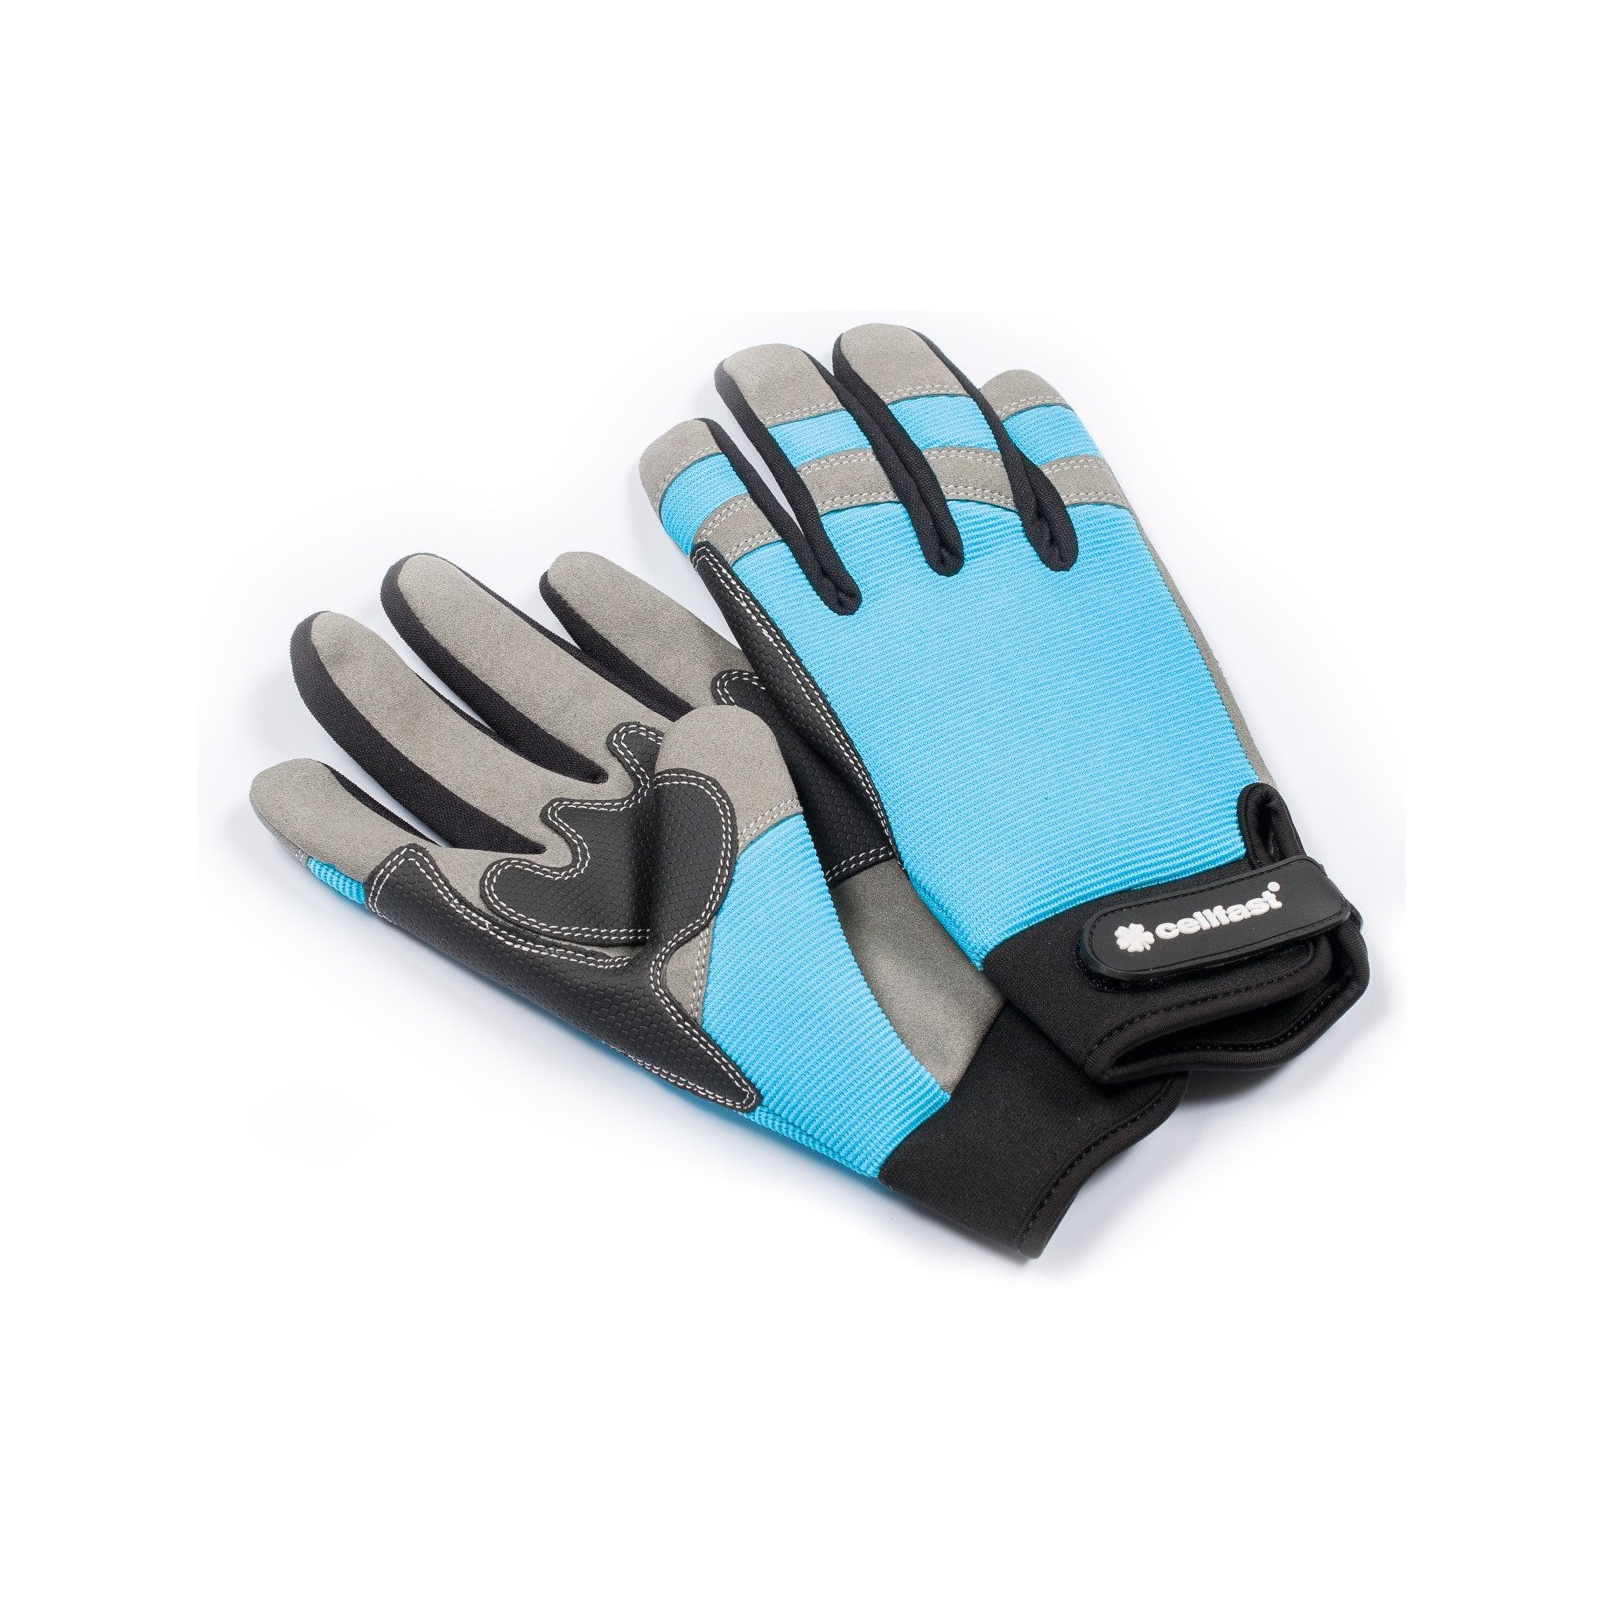 Защитные перчатки Cellfast ERGO, размер 8/М (92-012)